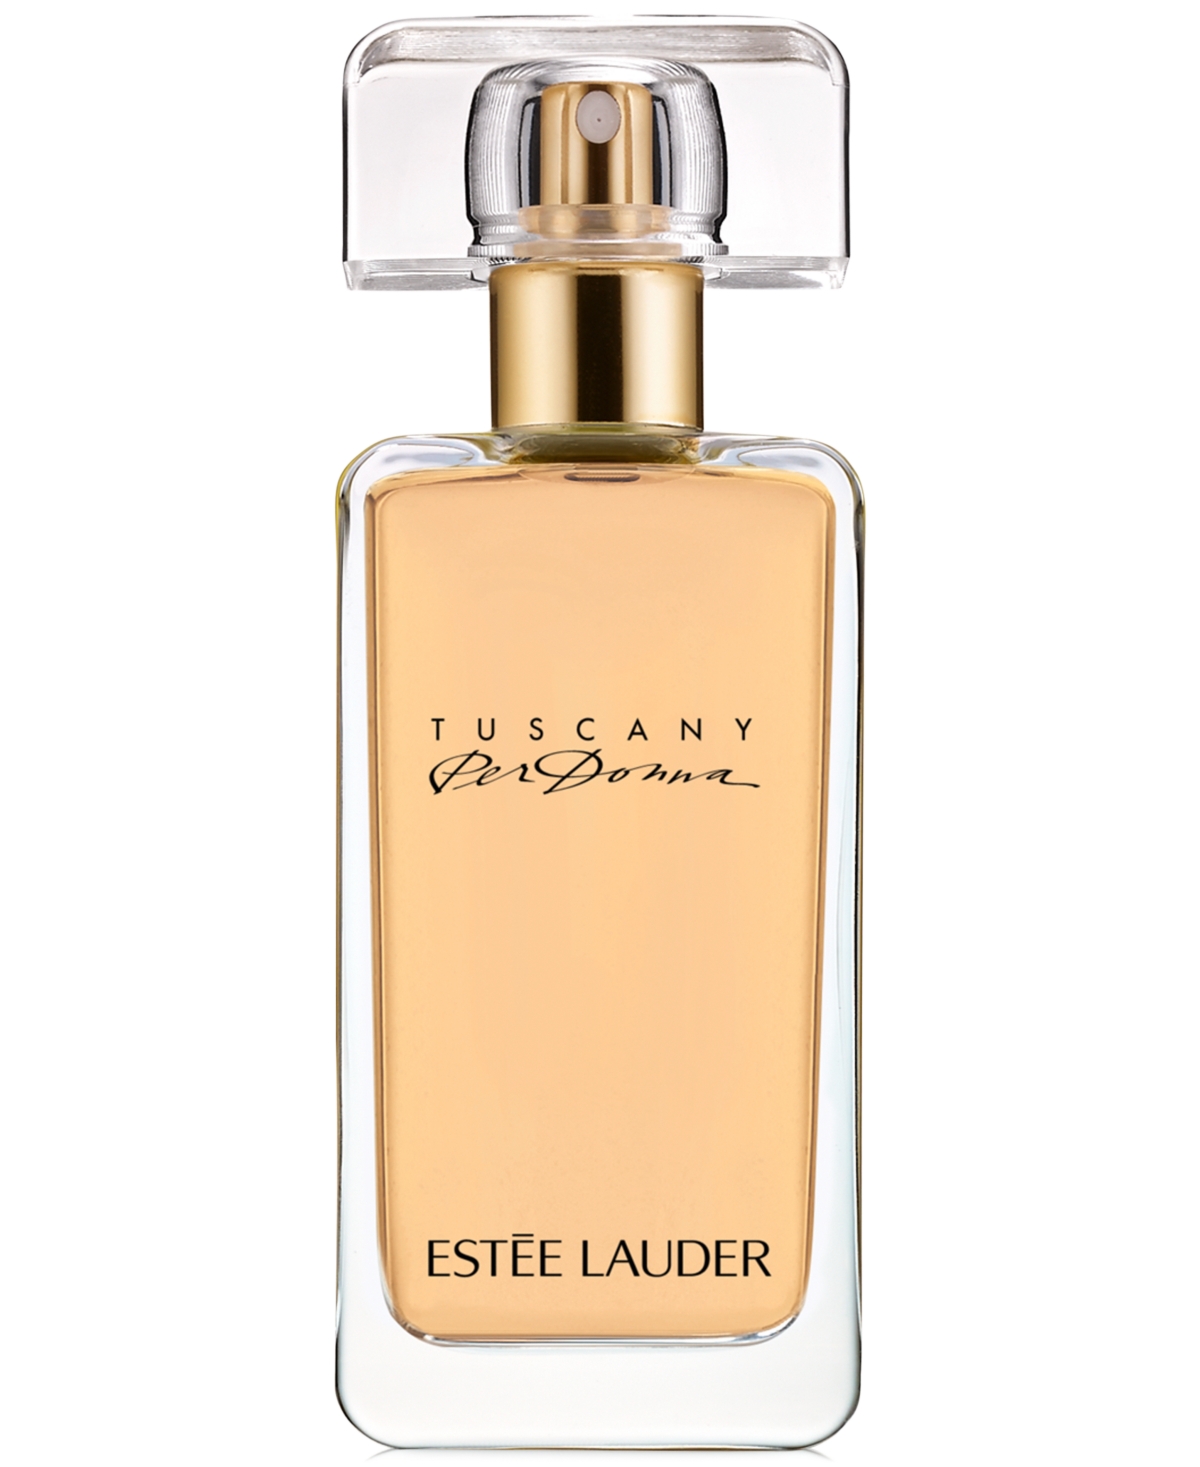 Estée Lauder Tuscany Per Donna Eau De Parfum Fragrance Spray, 1.7 oz In No Color